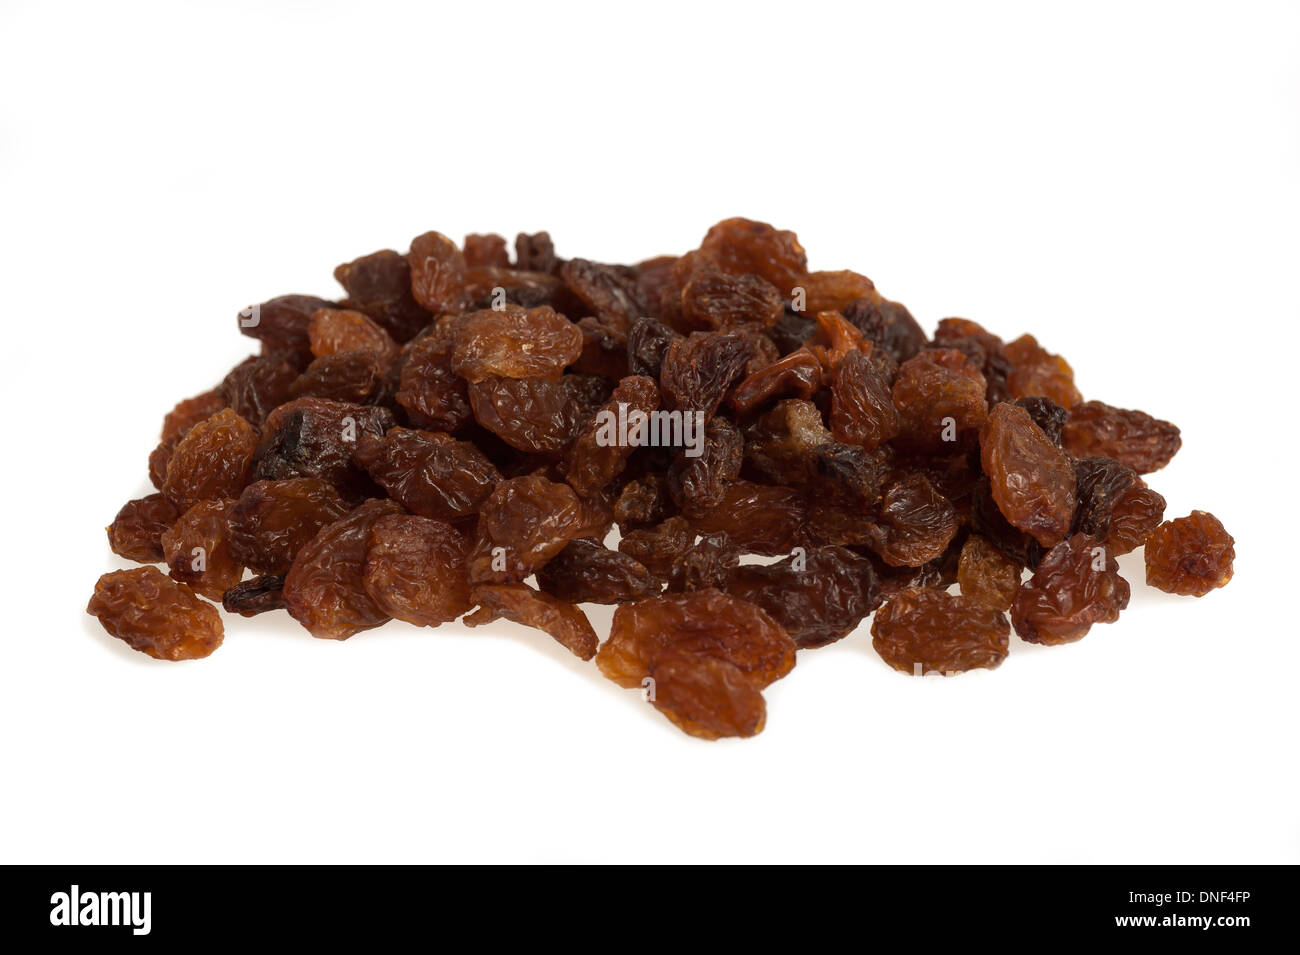 Sultana raisins pile isolated on white Stock Photo - Alamy